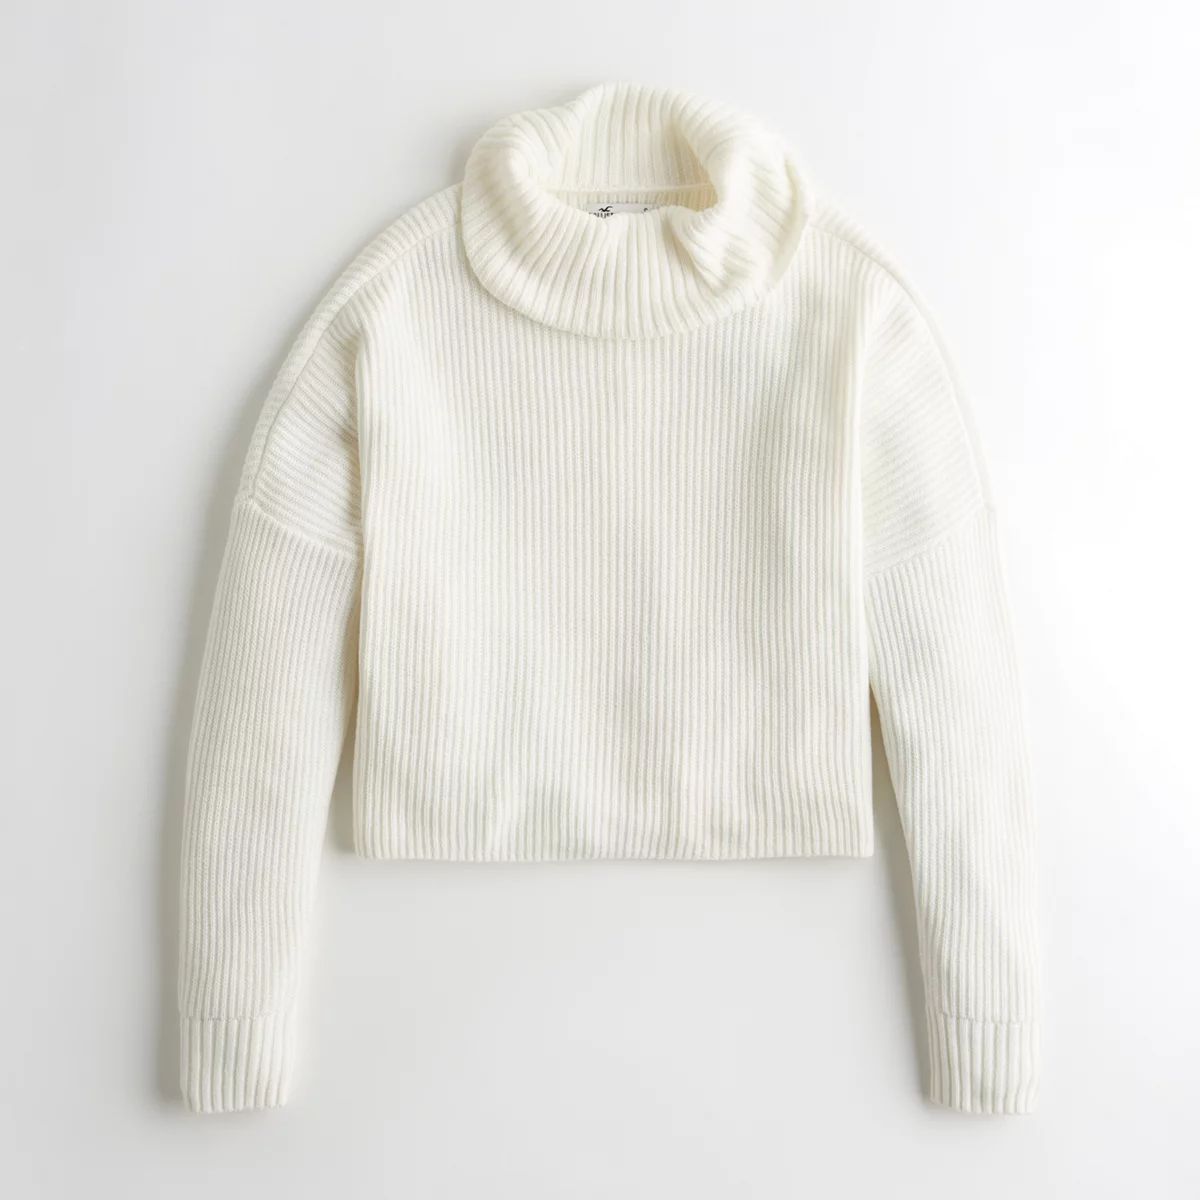 Girls Ribbed Turtleneck Sweater from Hollister | Hollister US